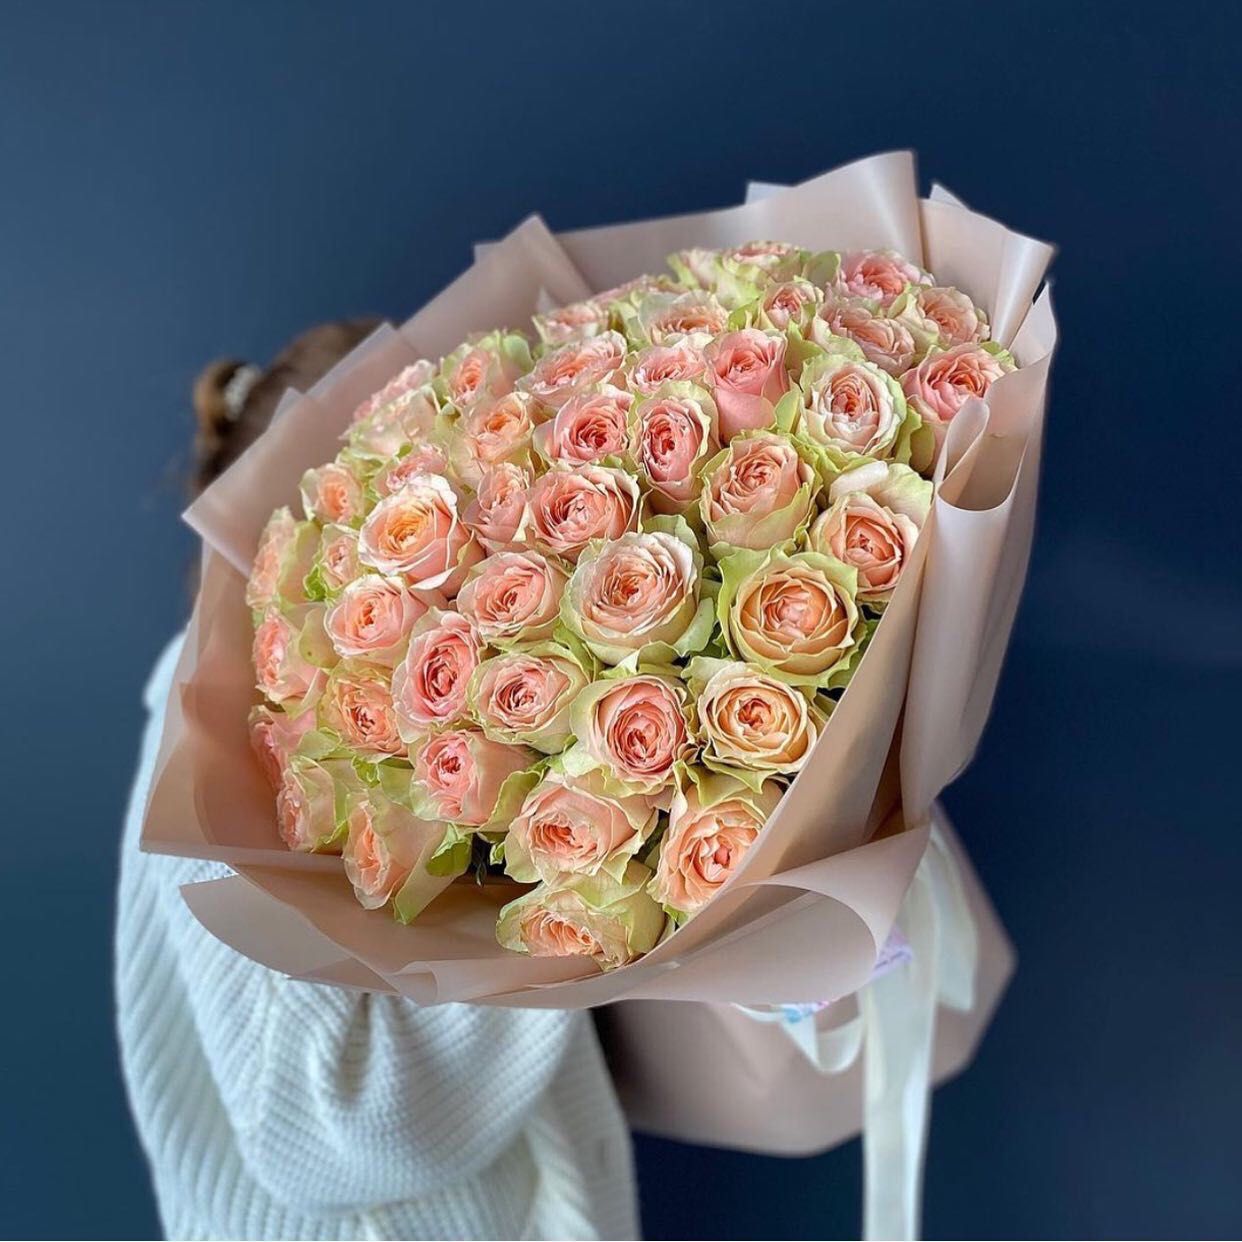 розы тюльпаны пионы Голландия цветы букеты